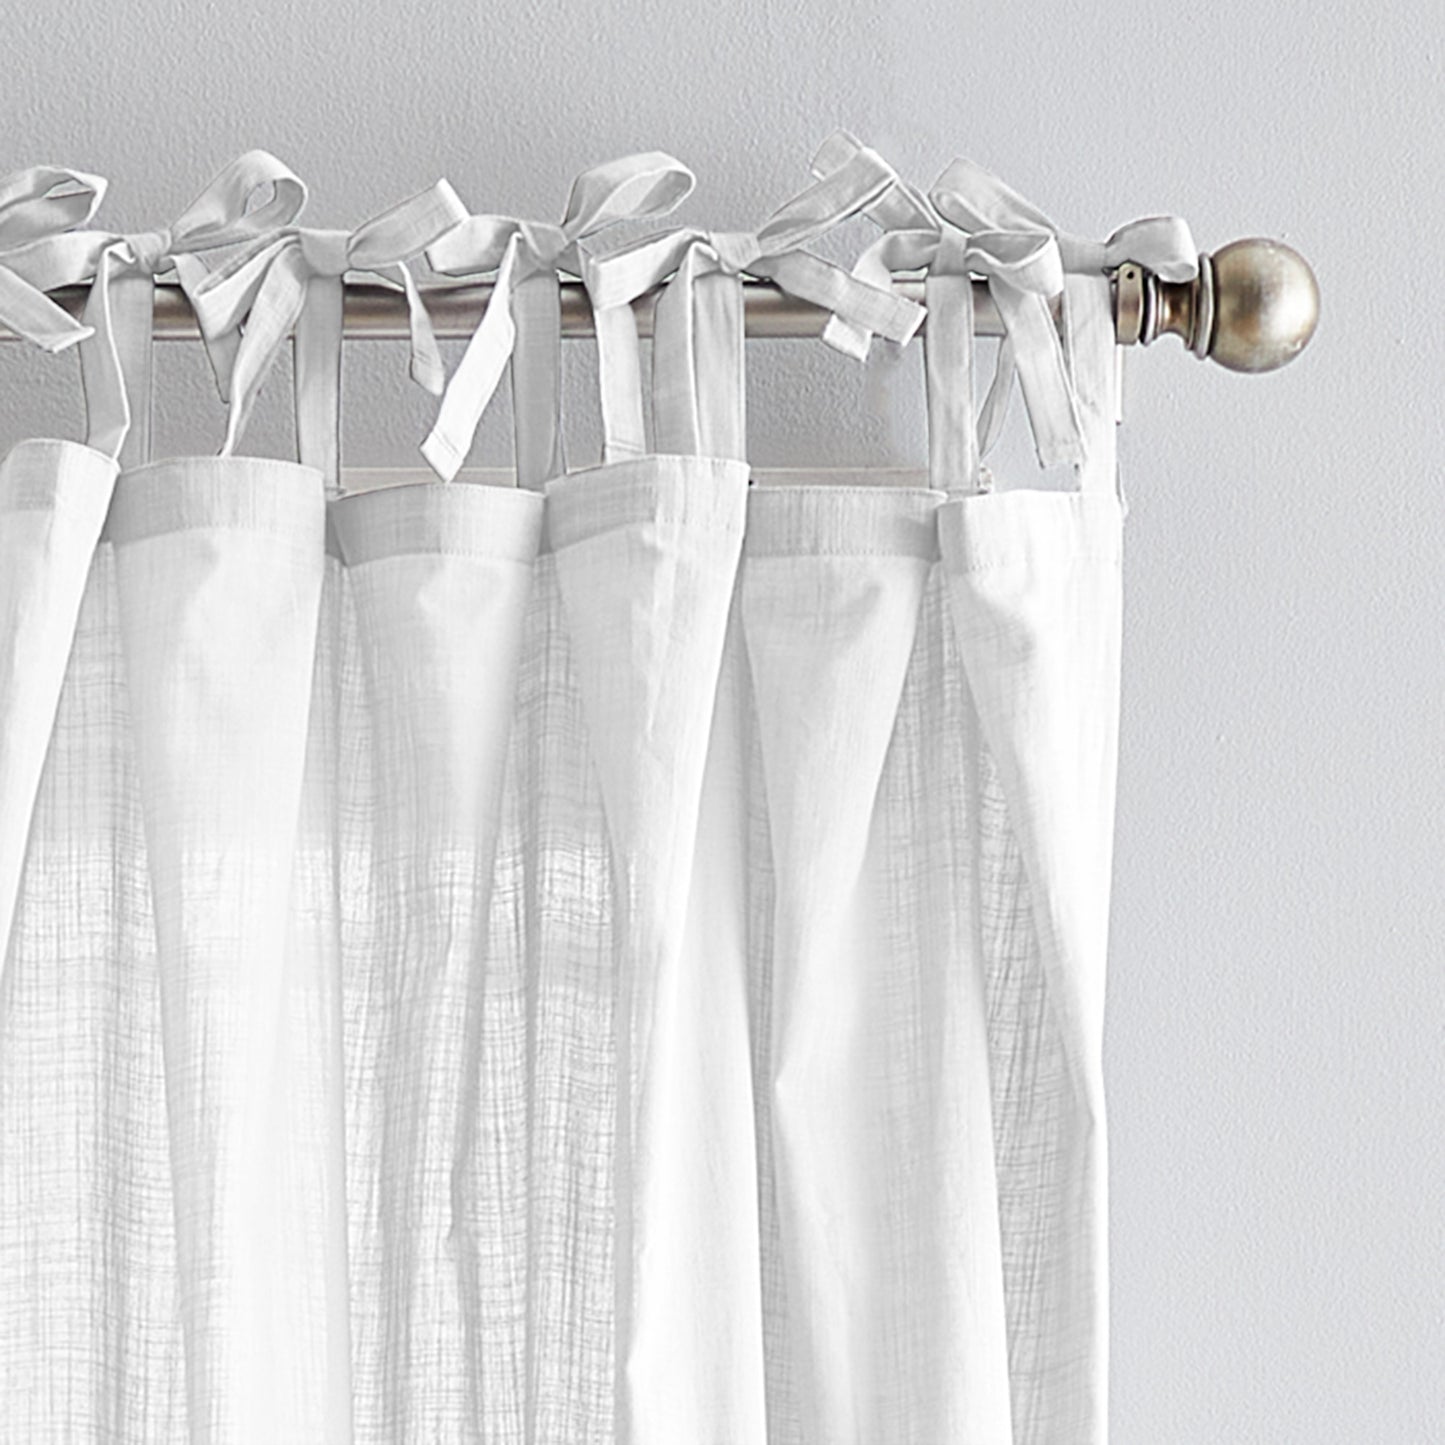 Peri Home 100% Cotton Sheer Curtain Panel